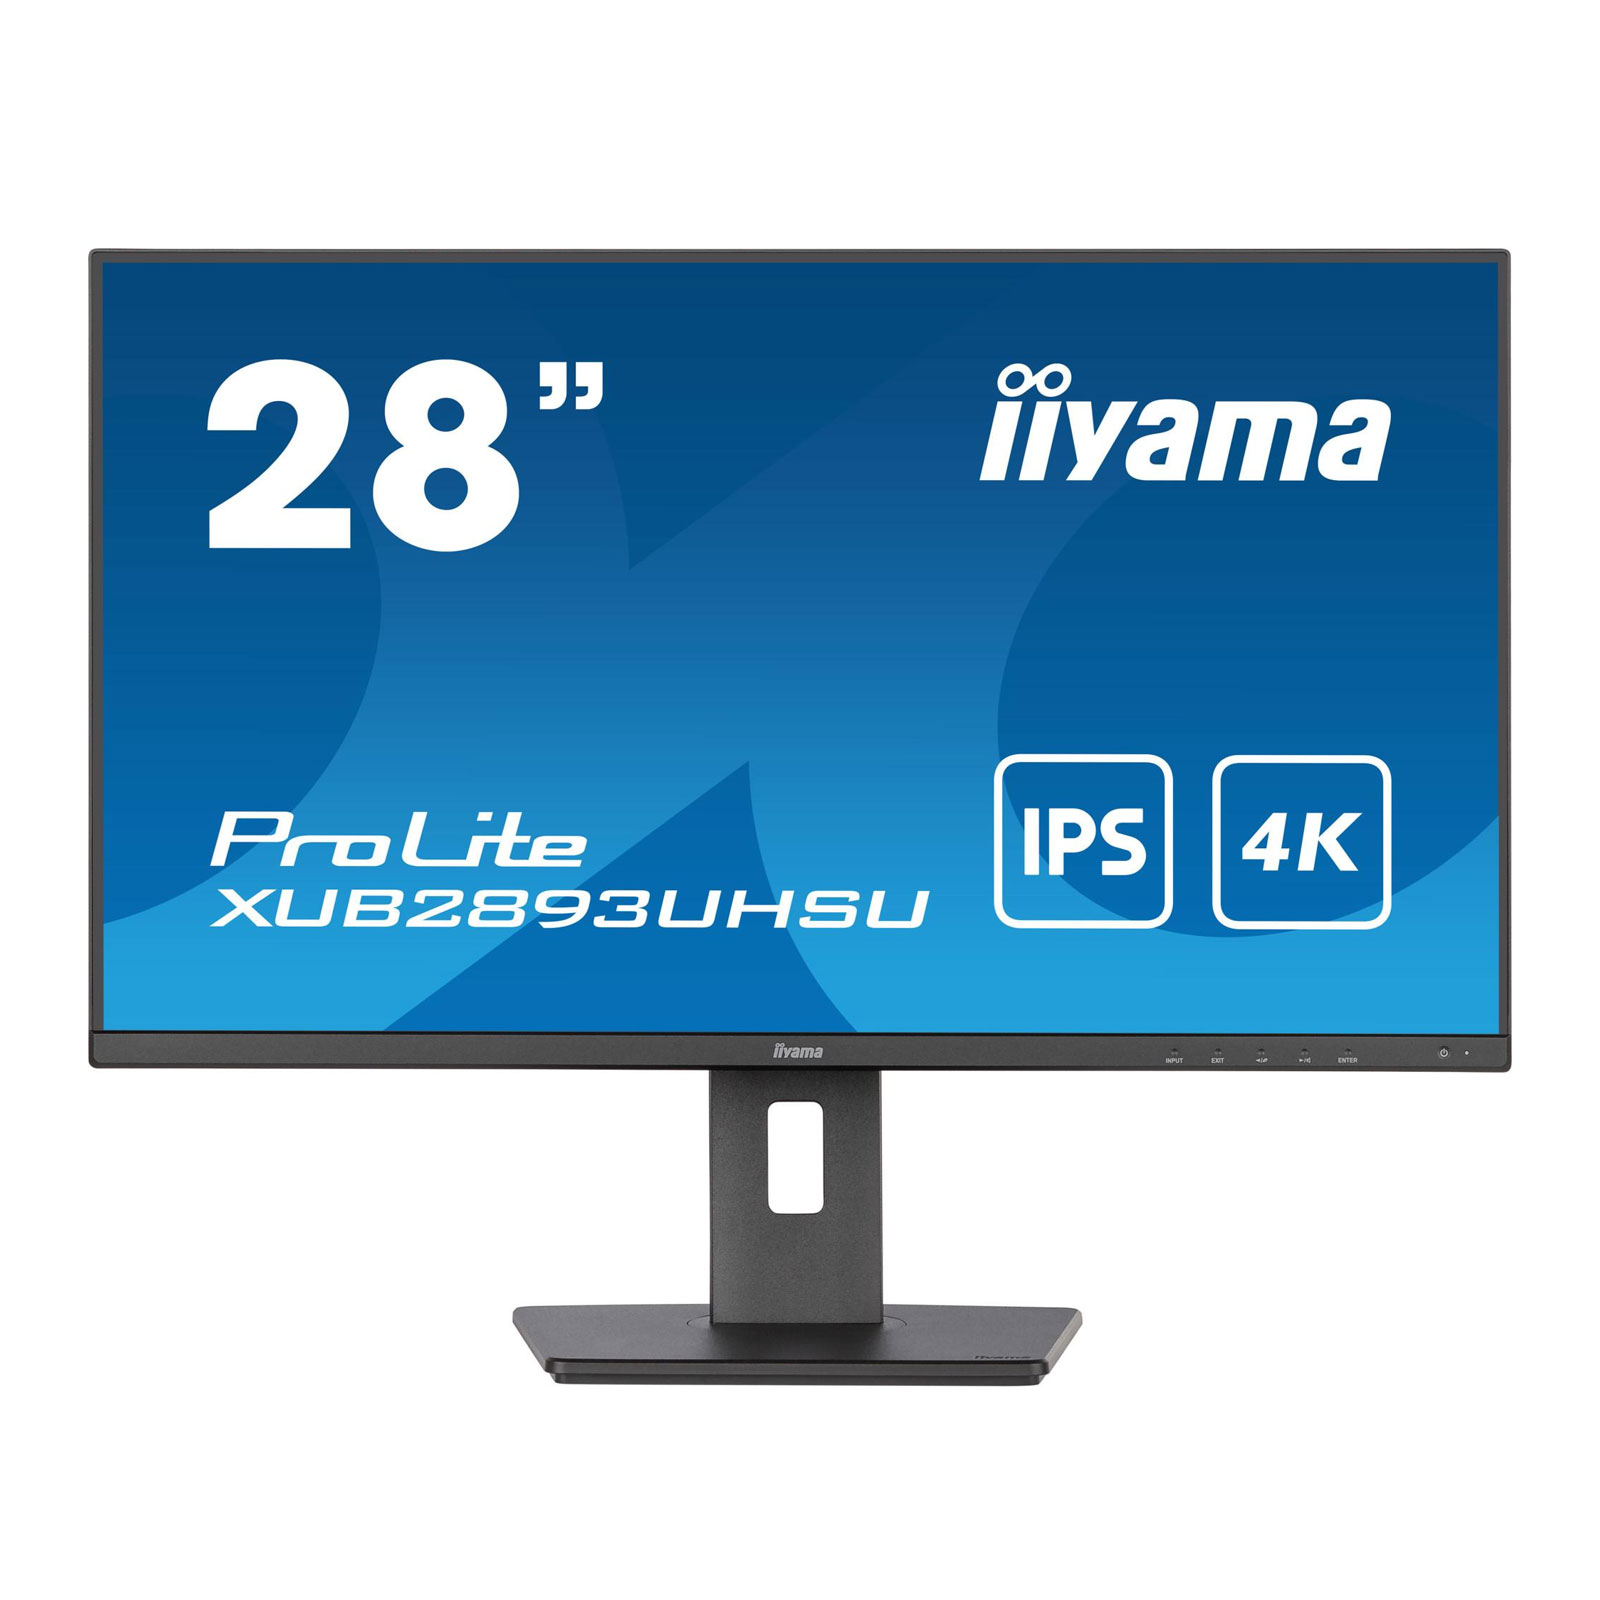 iiyama Prolite XUB2893UHSU-B5 Monitor